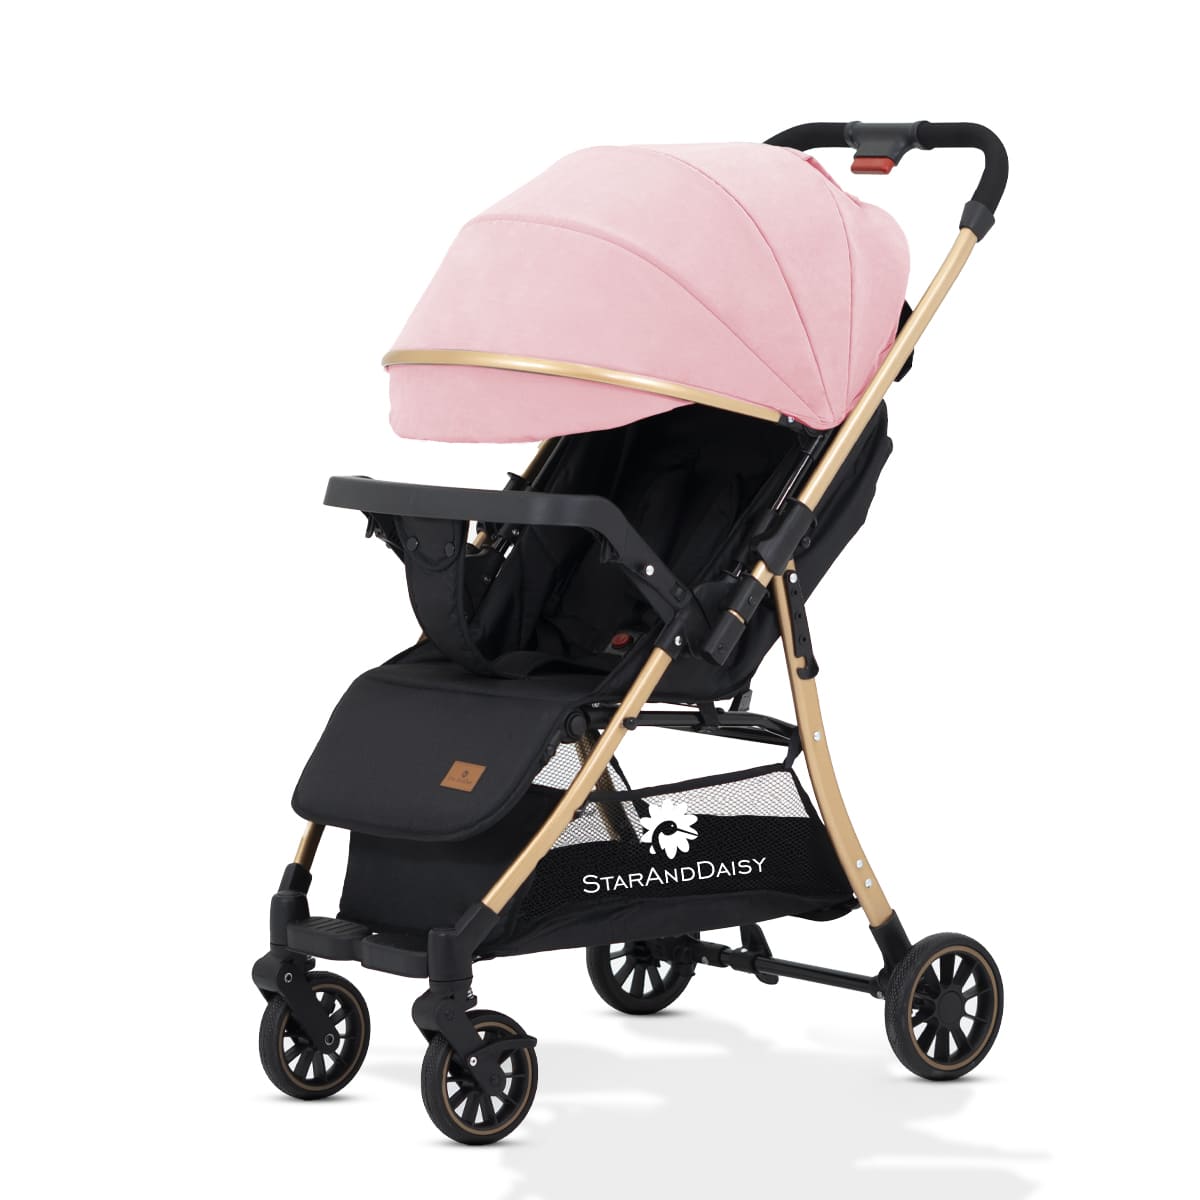 Buy Baby Stroller Pram for Travel - Lightweight & Compact Design